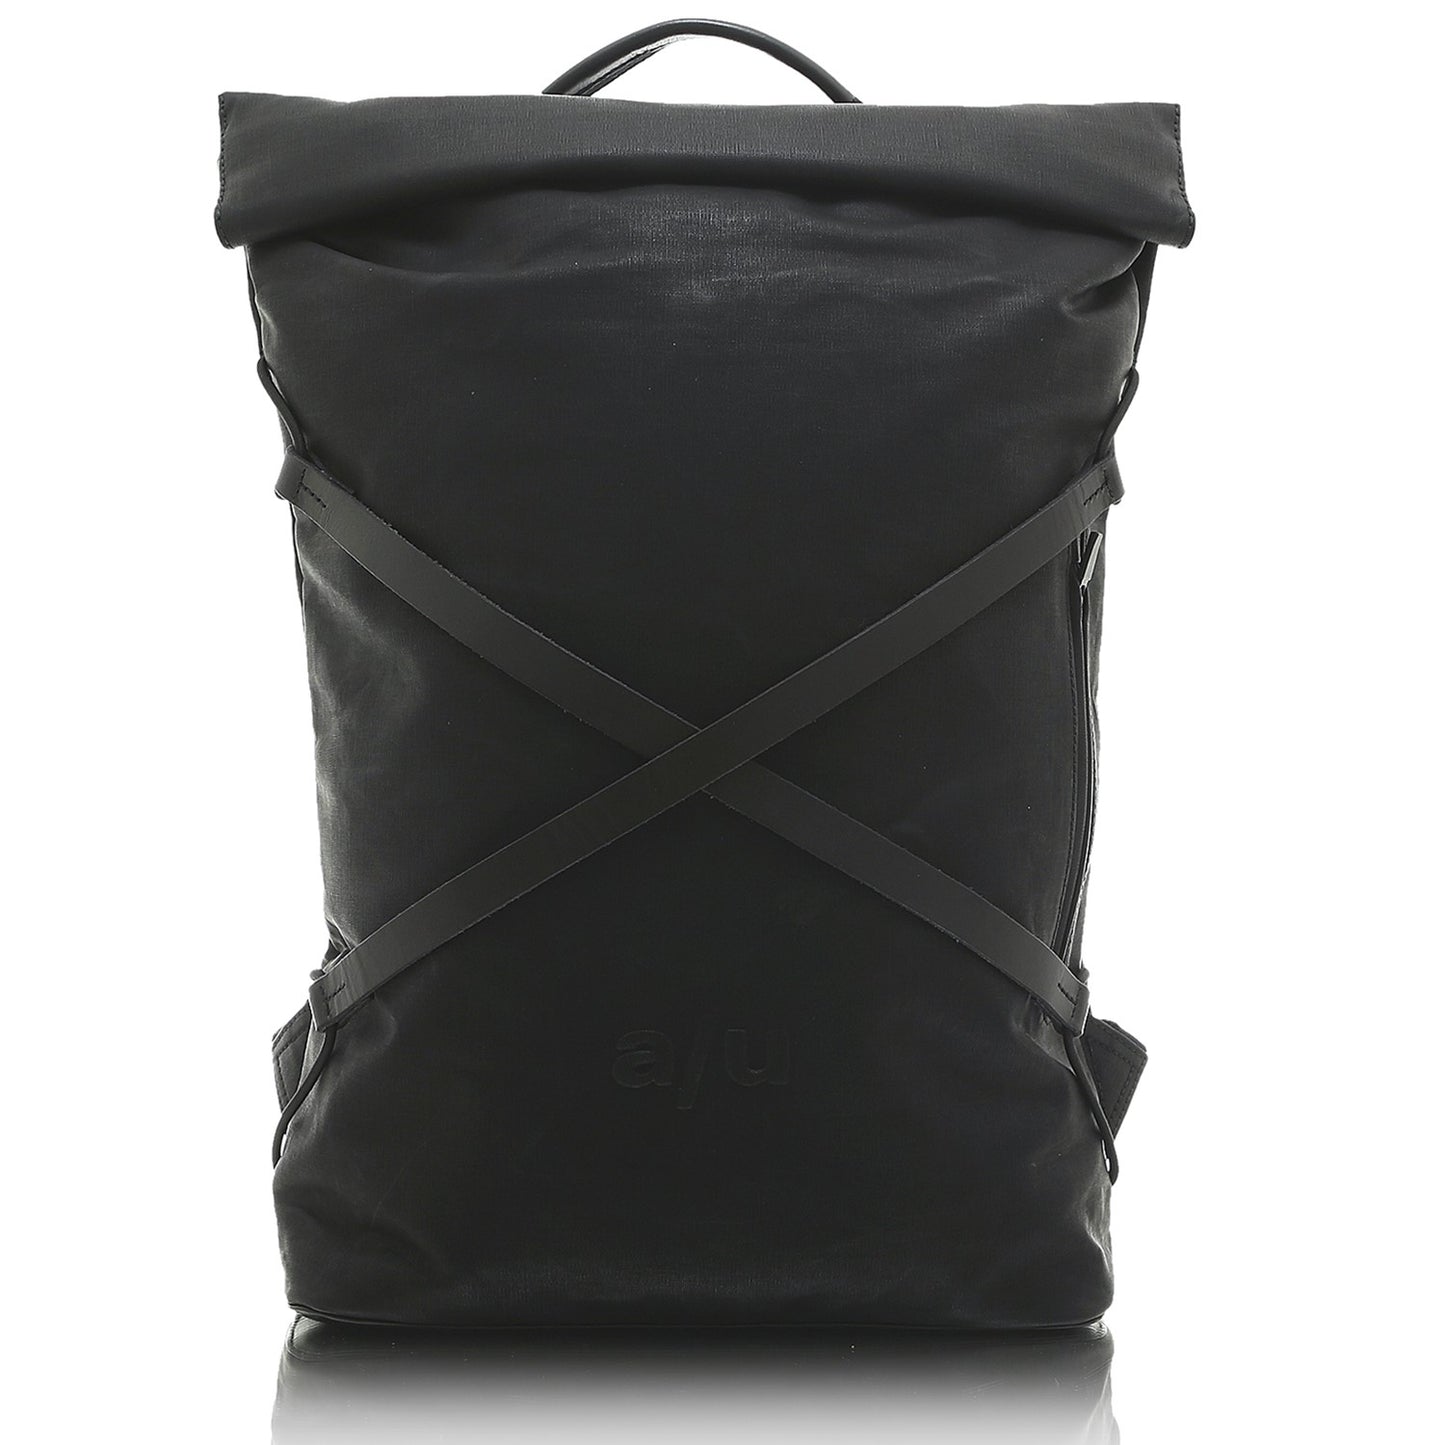 Osaka Rucksack 15" black | Bildmaterial bereitgestellt von SHOES.PLEASE.